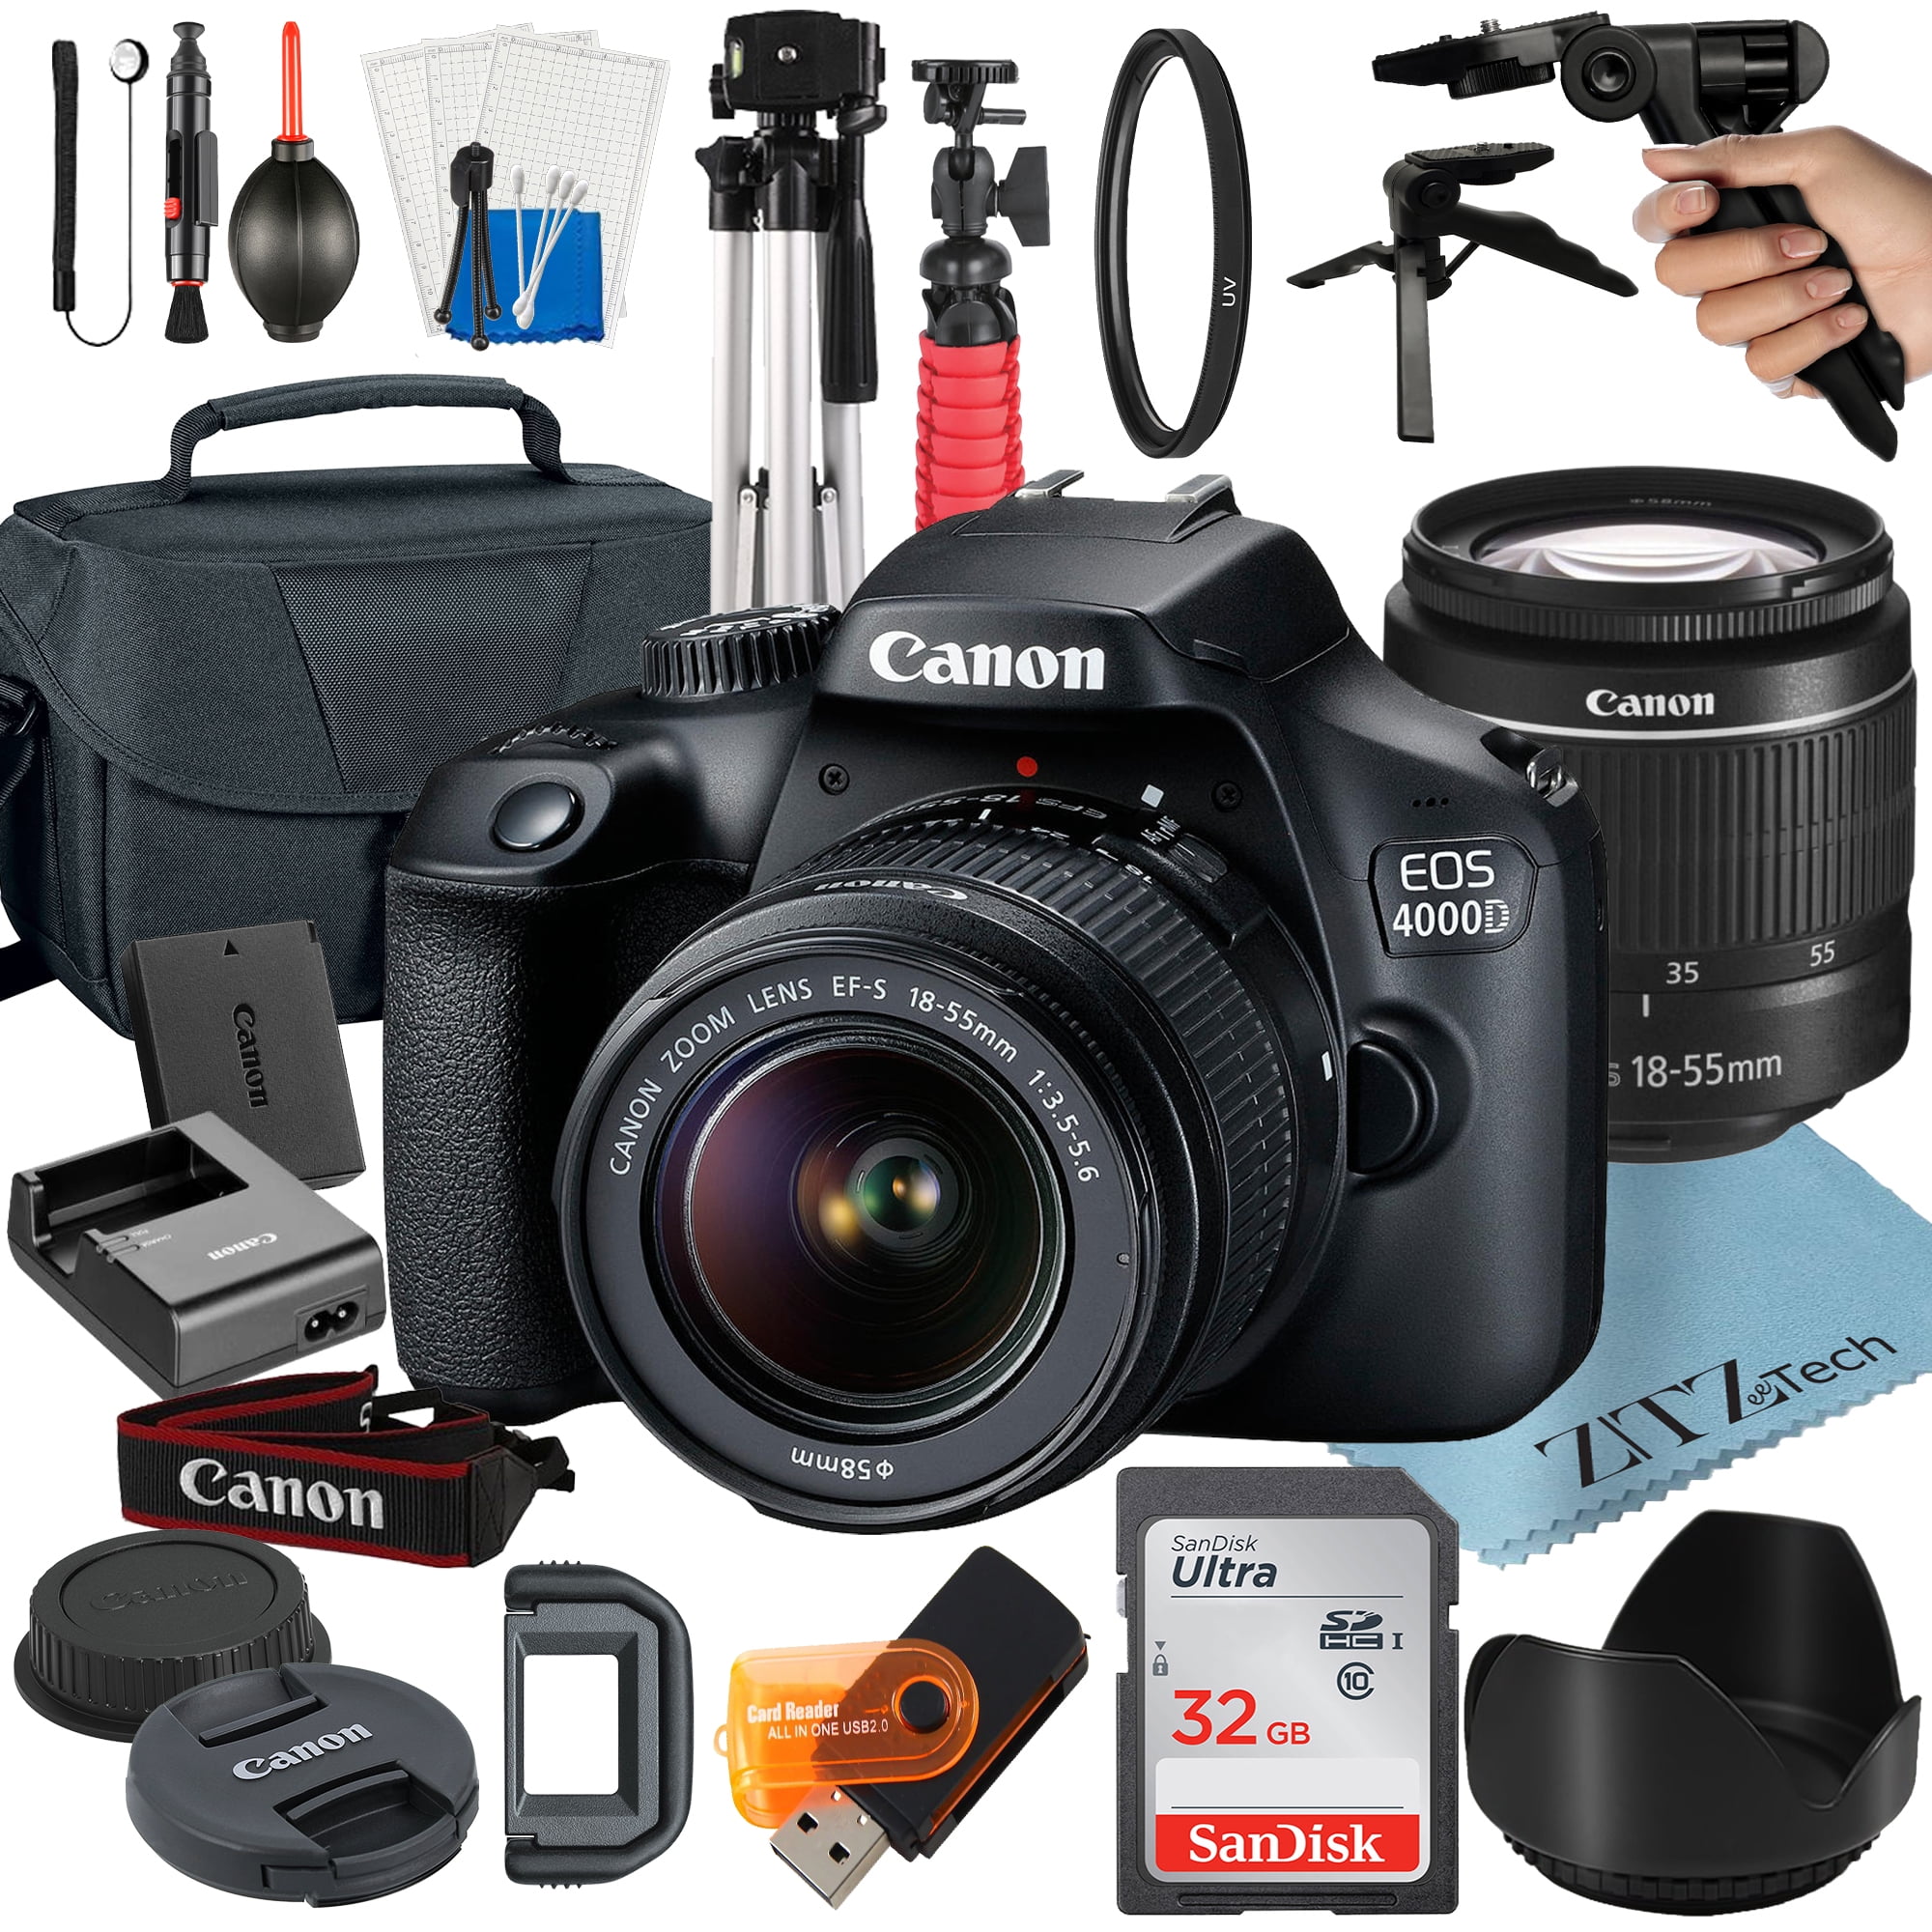 Canon EOS T100 / 4000D DSLR Camera with 18-55mm Zoom Lens + 32GB SanDisk Card + Case + Tripod + ZeeTech Accessory - Walmart.com